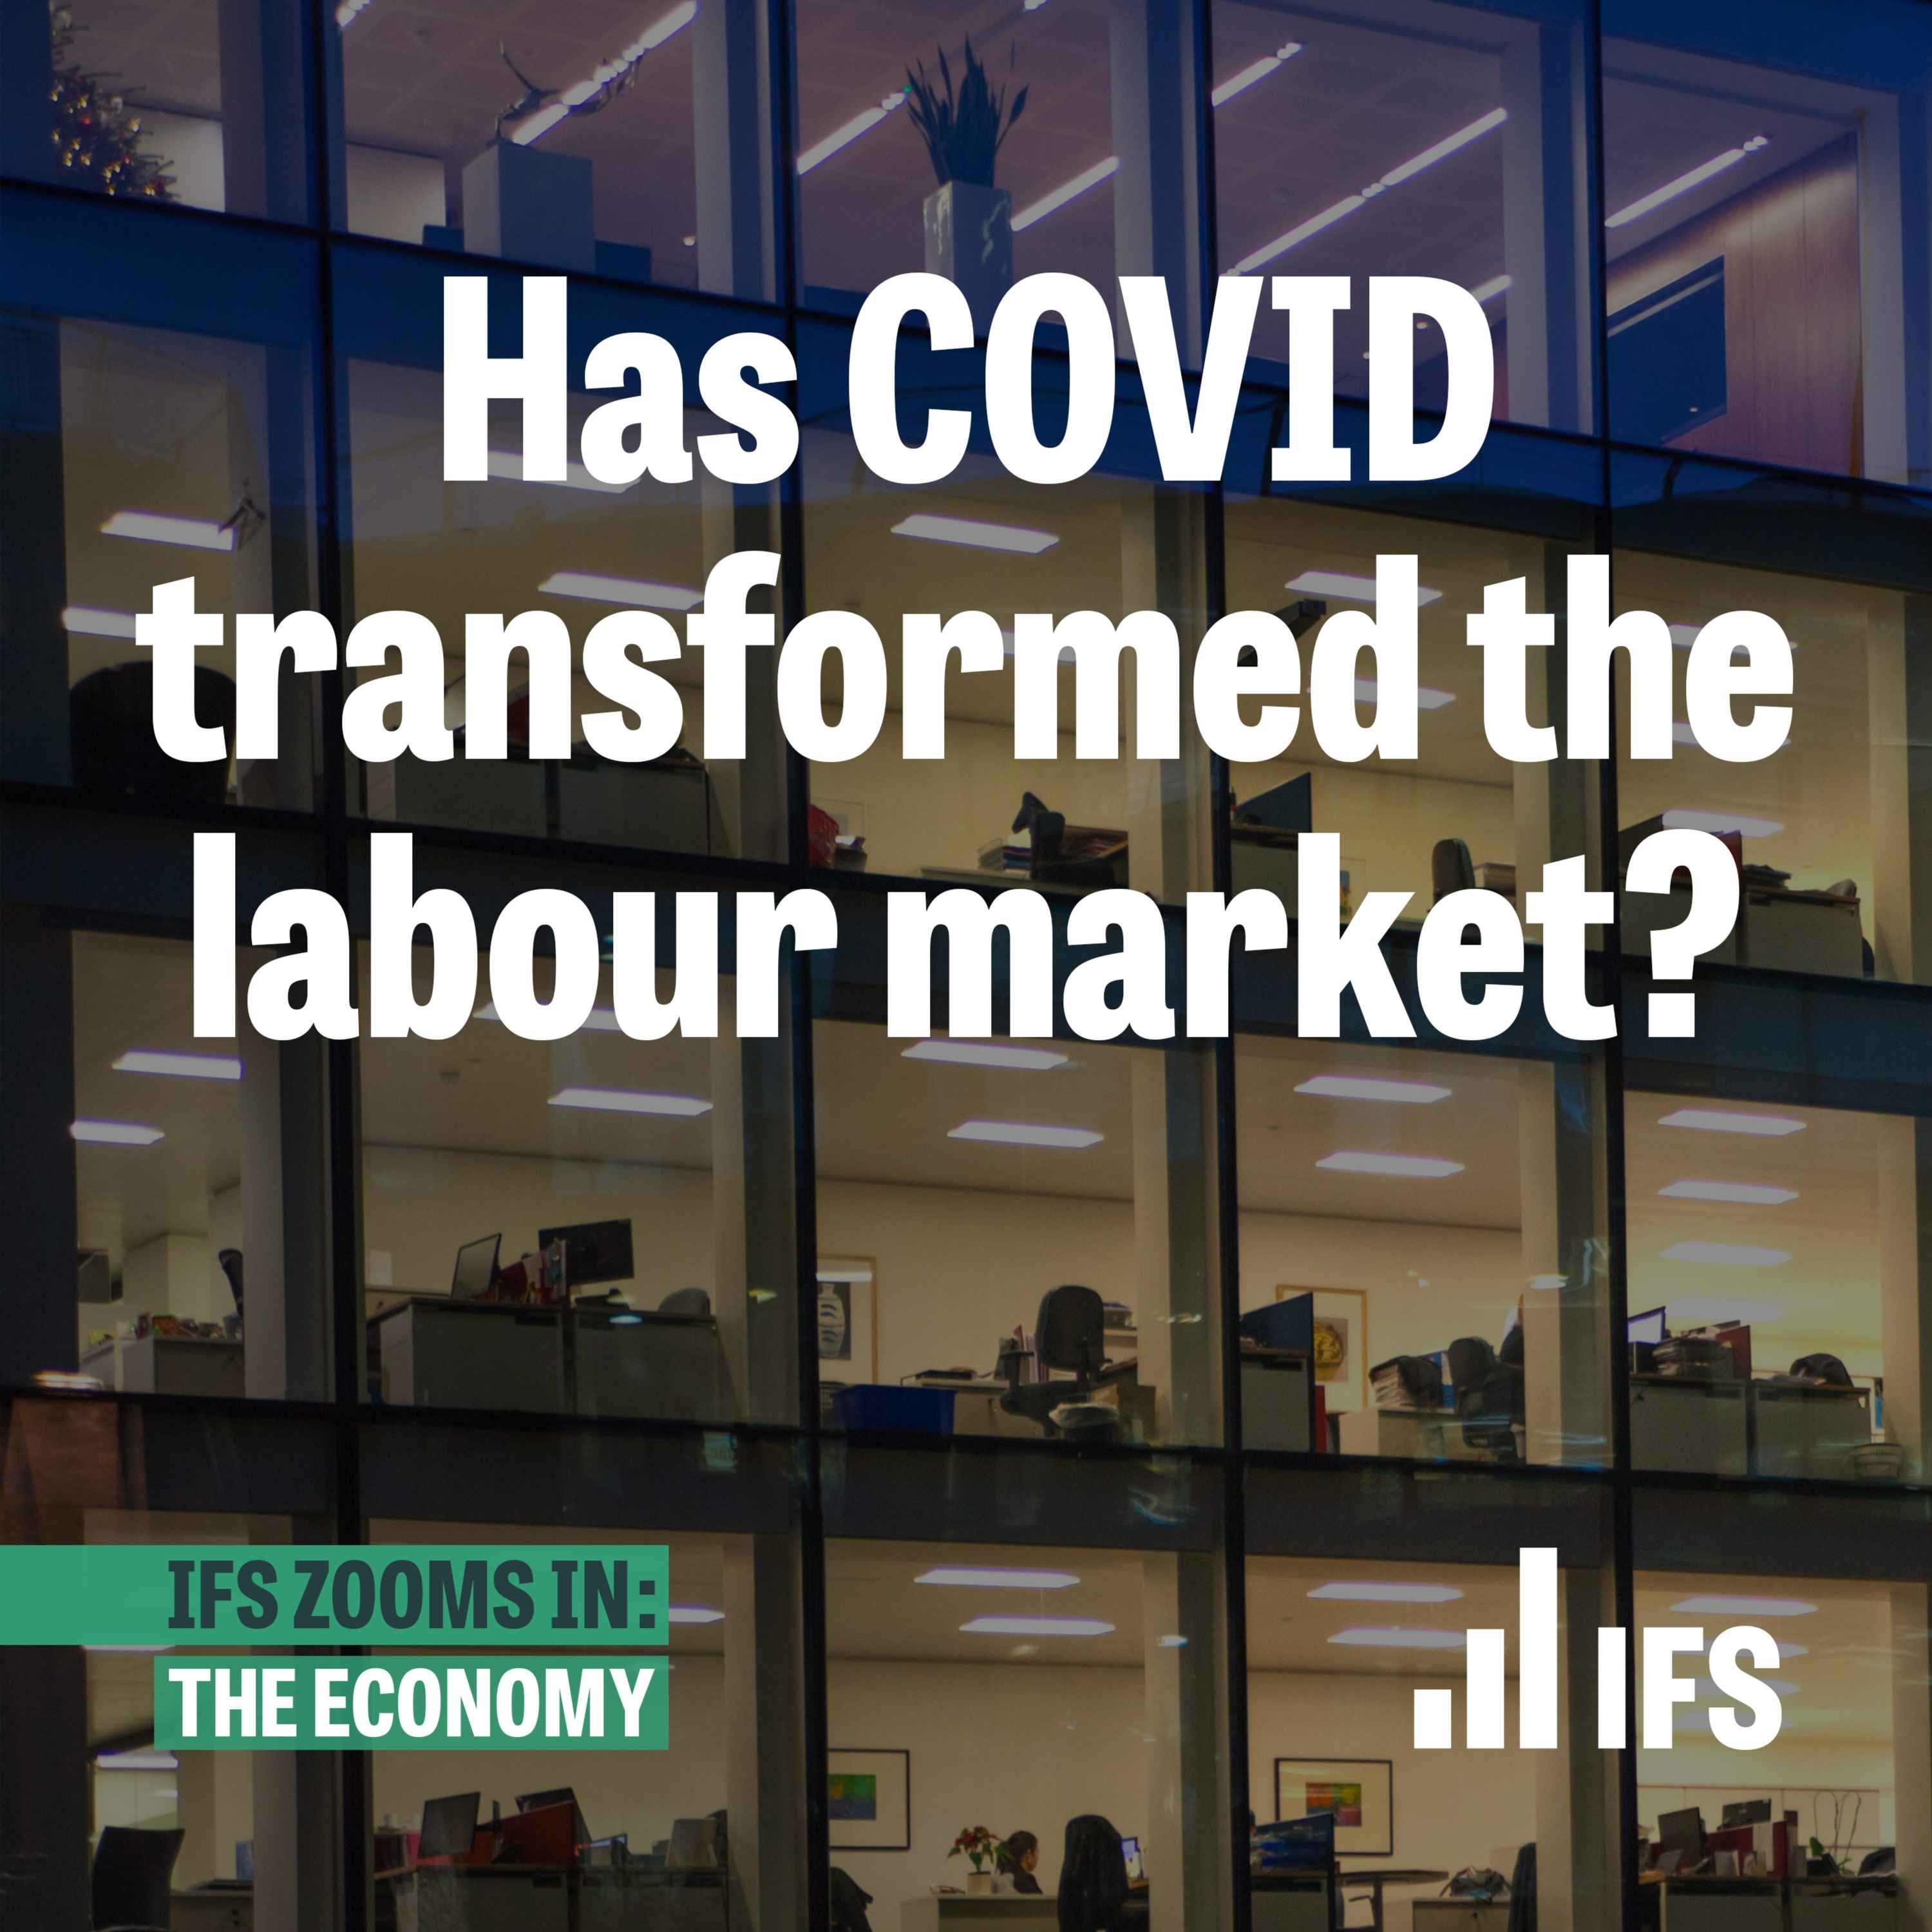 Has COVID transformed the labour market?